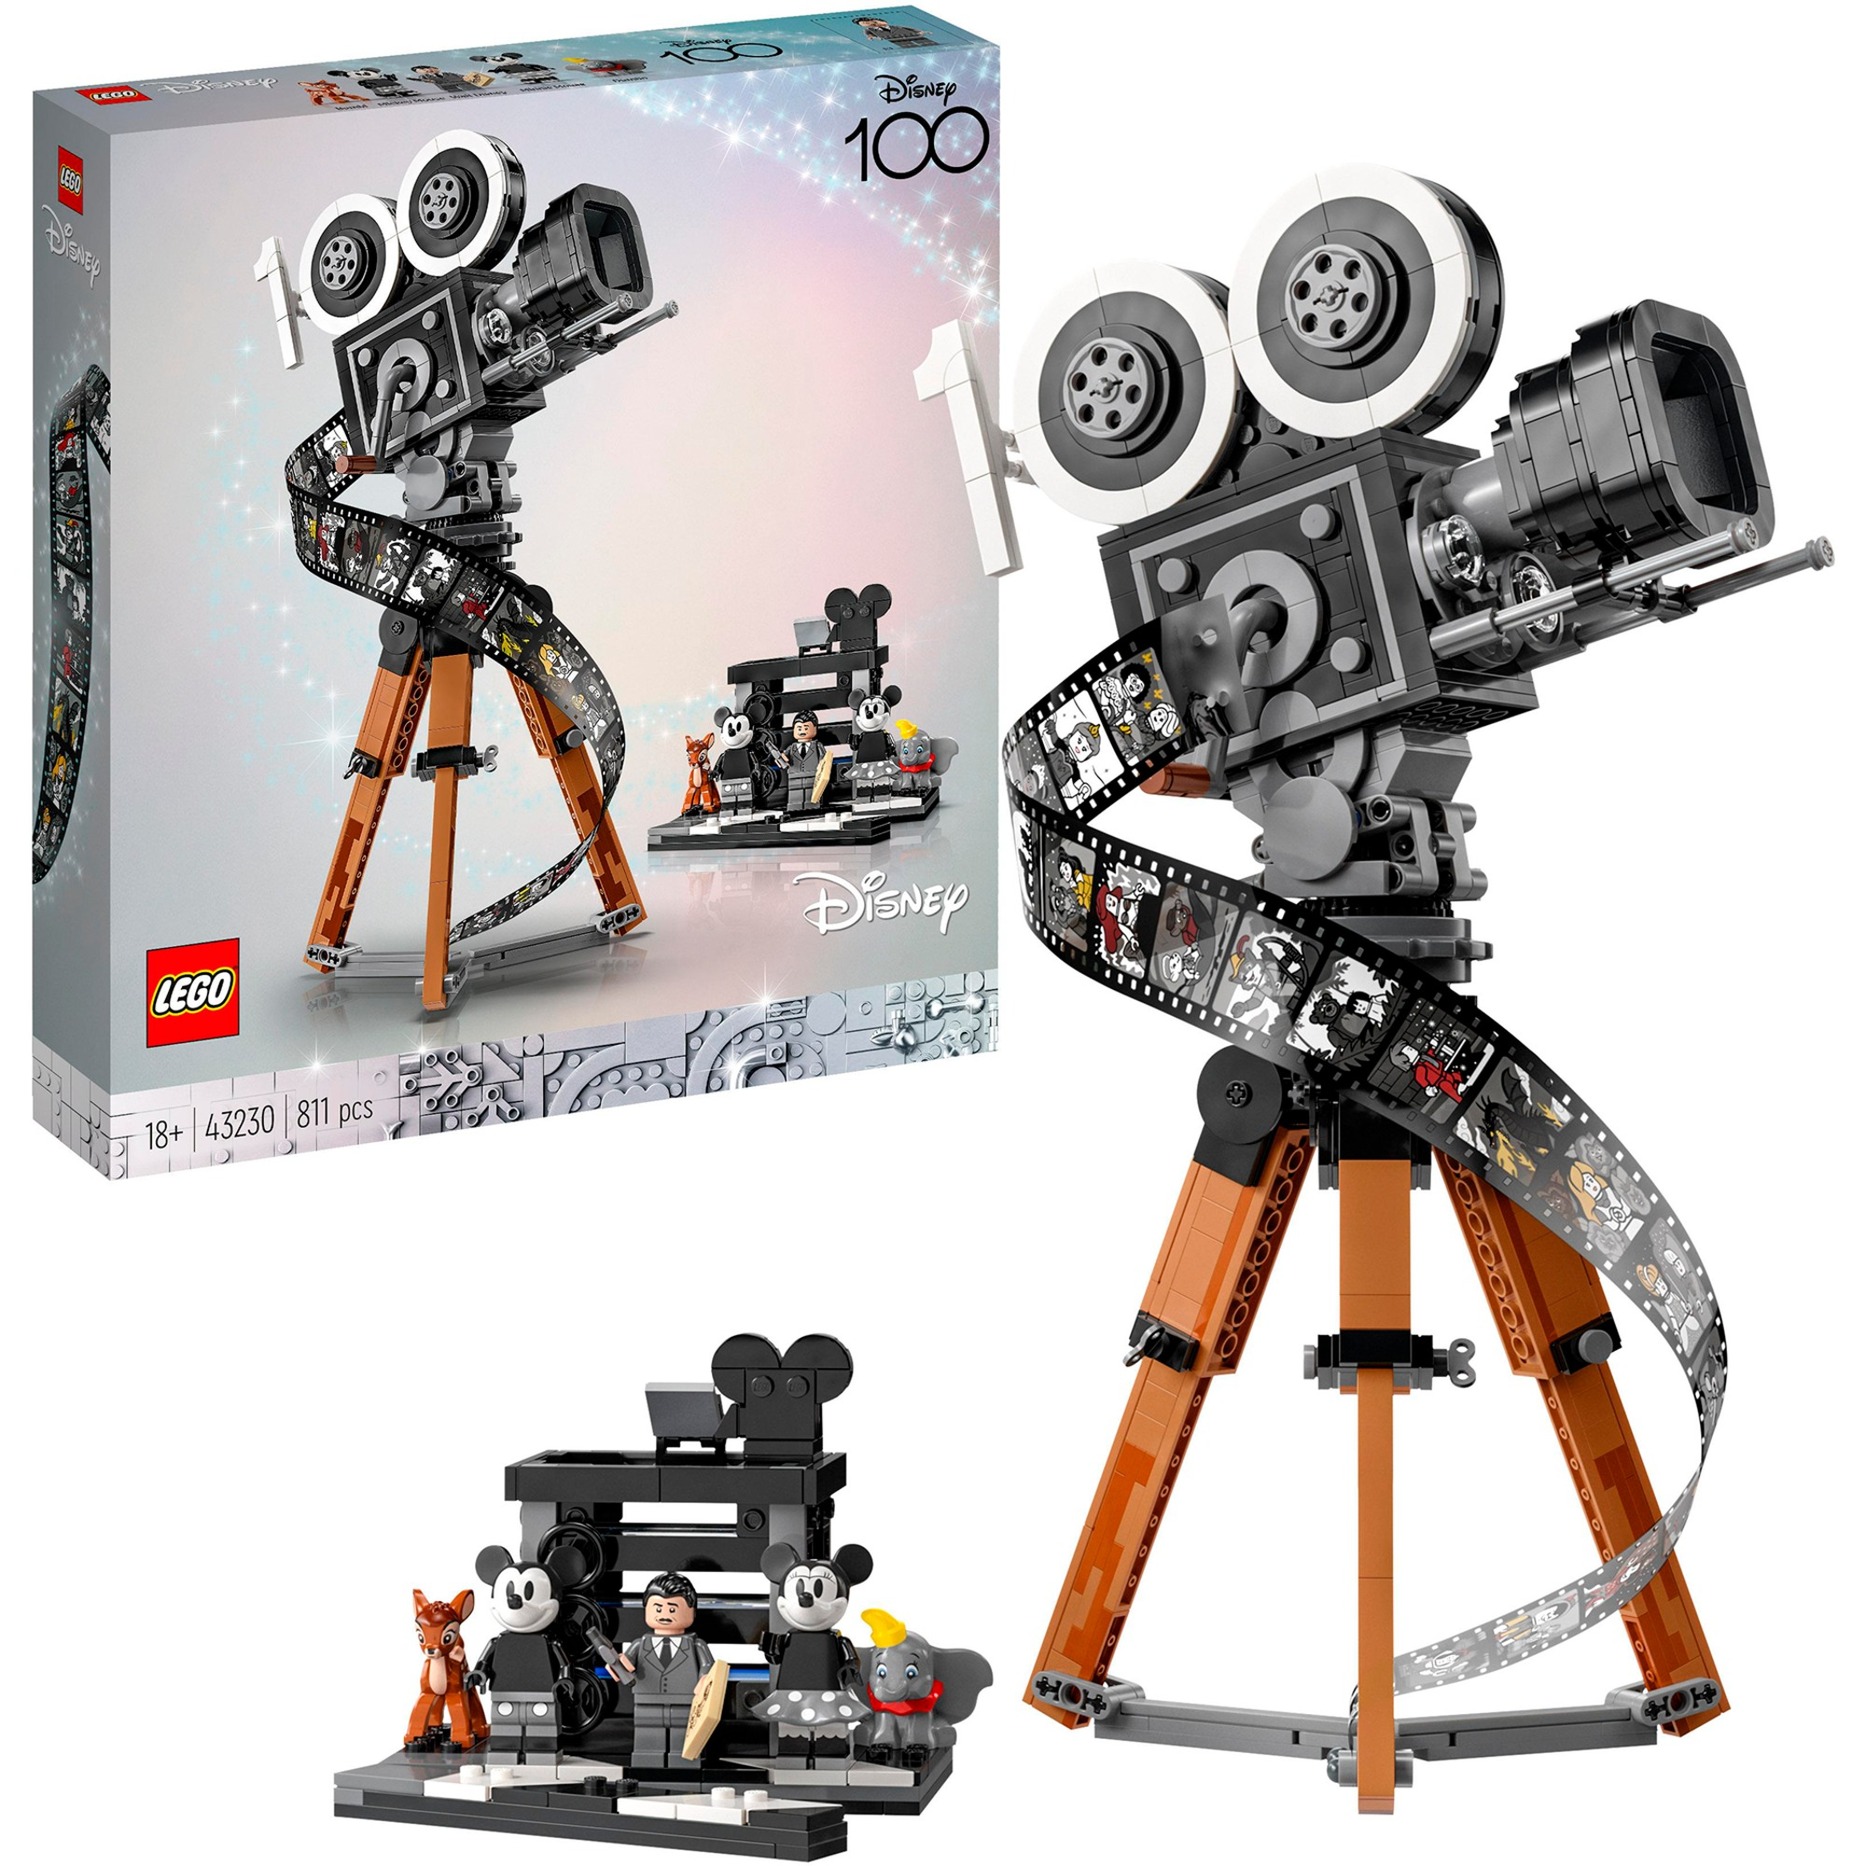 43230 Disney Classic Kamera - Hommage an Walt Disney, Konstruktionsspielzeug von Lego